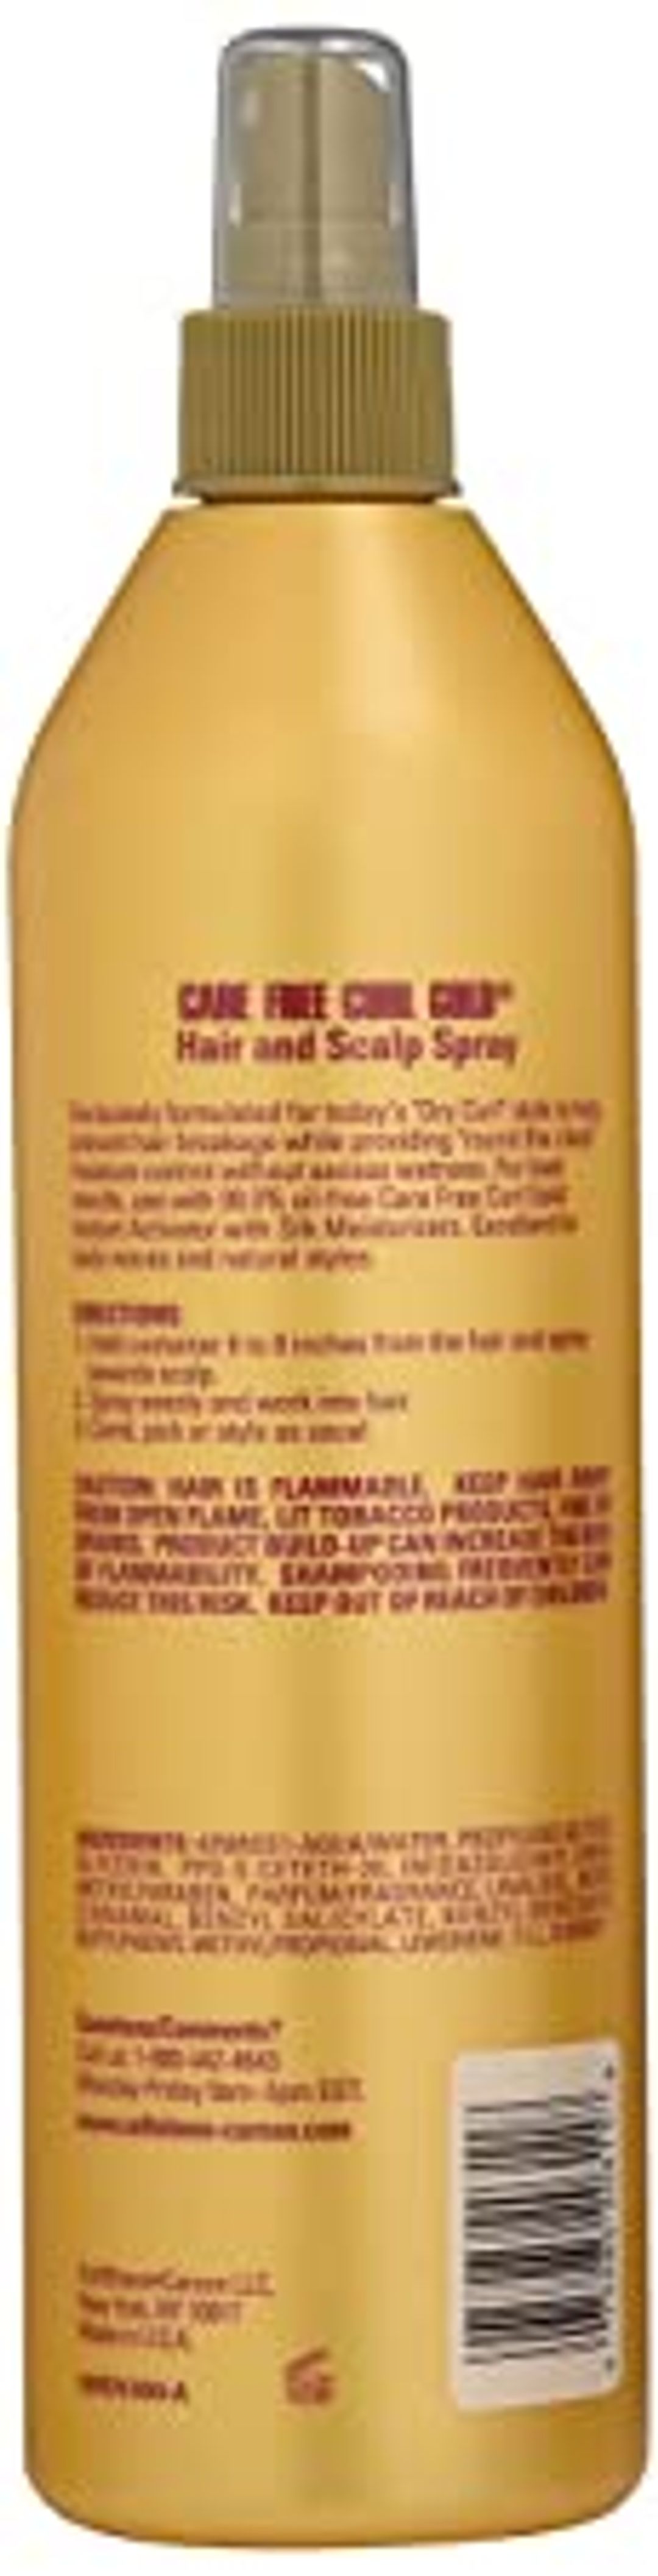 Care Free Curl Gold Hair & Scalp Spray - 16oz